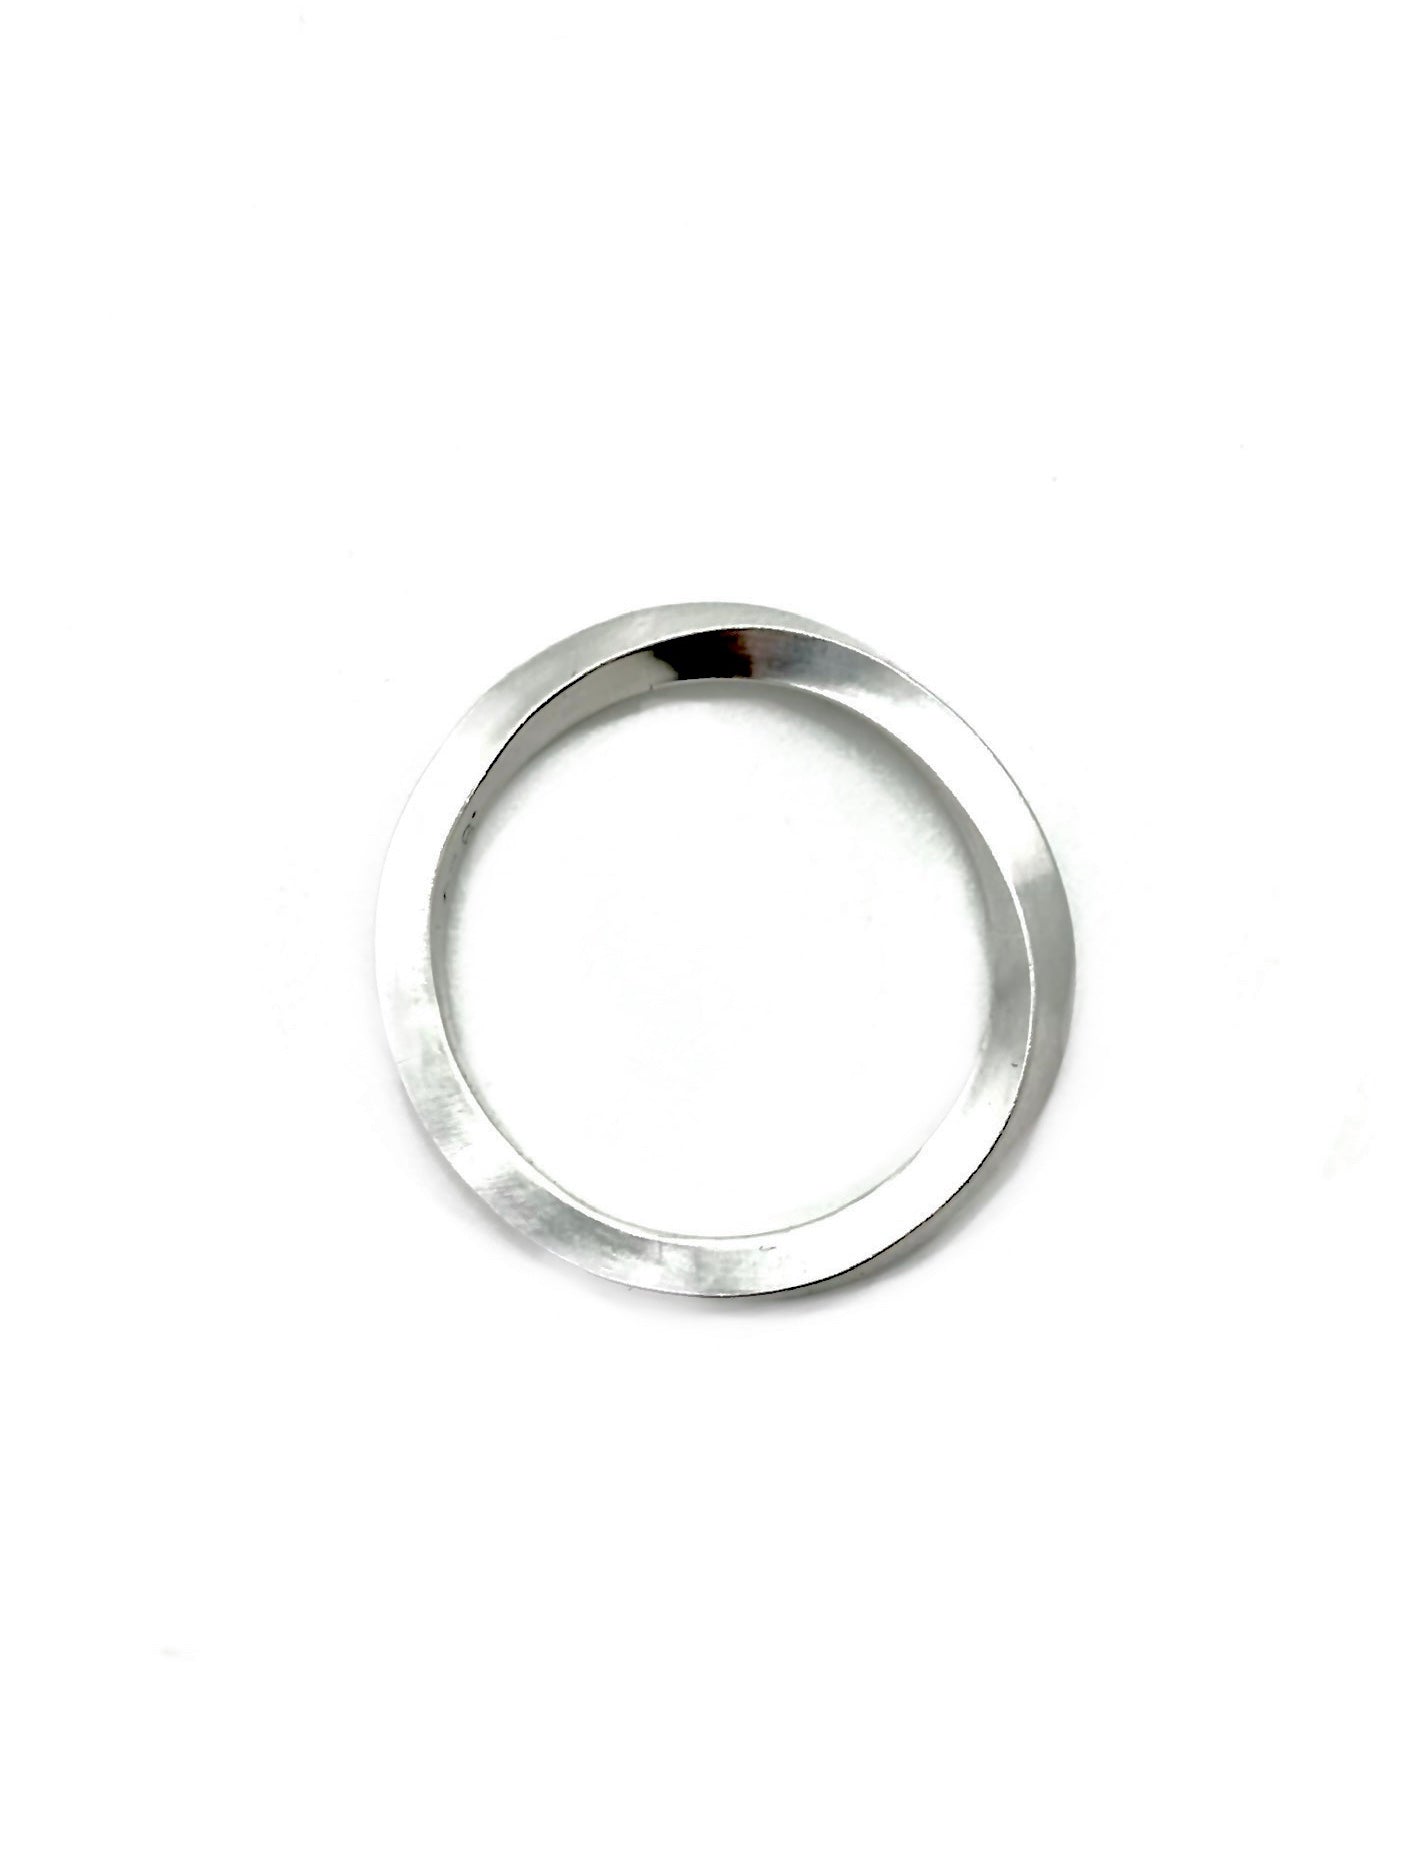 Möbius Ring in Sterling Silver